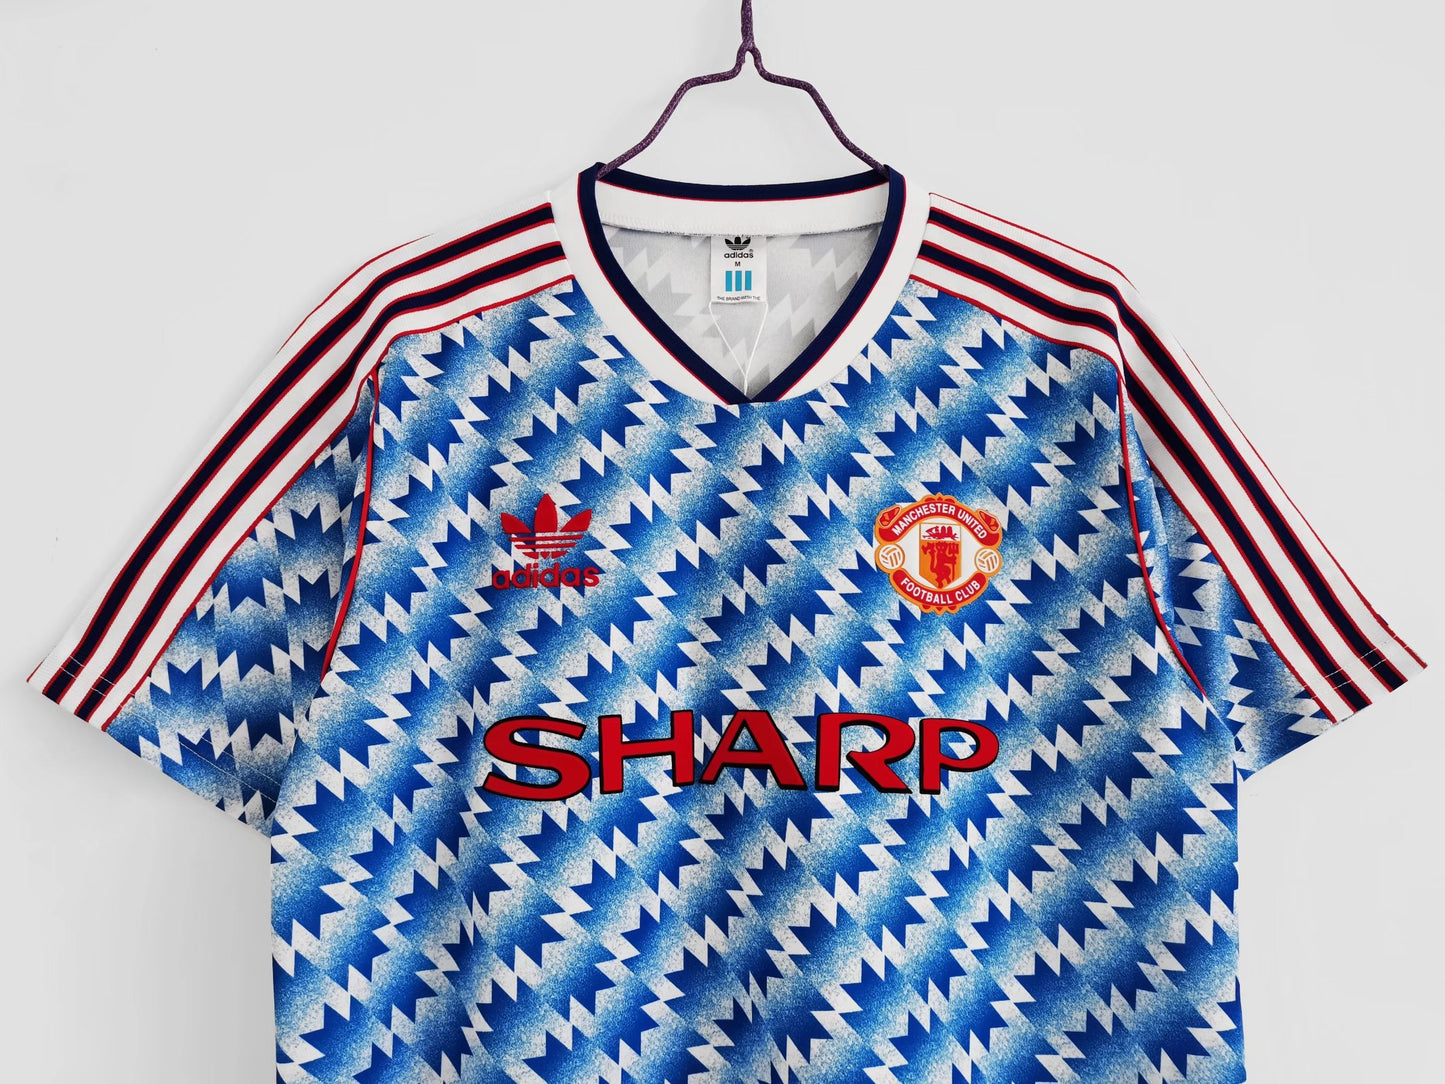 Manchester United Retro Shirt 1990/92